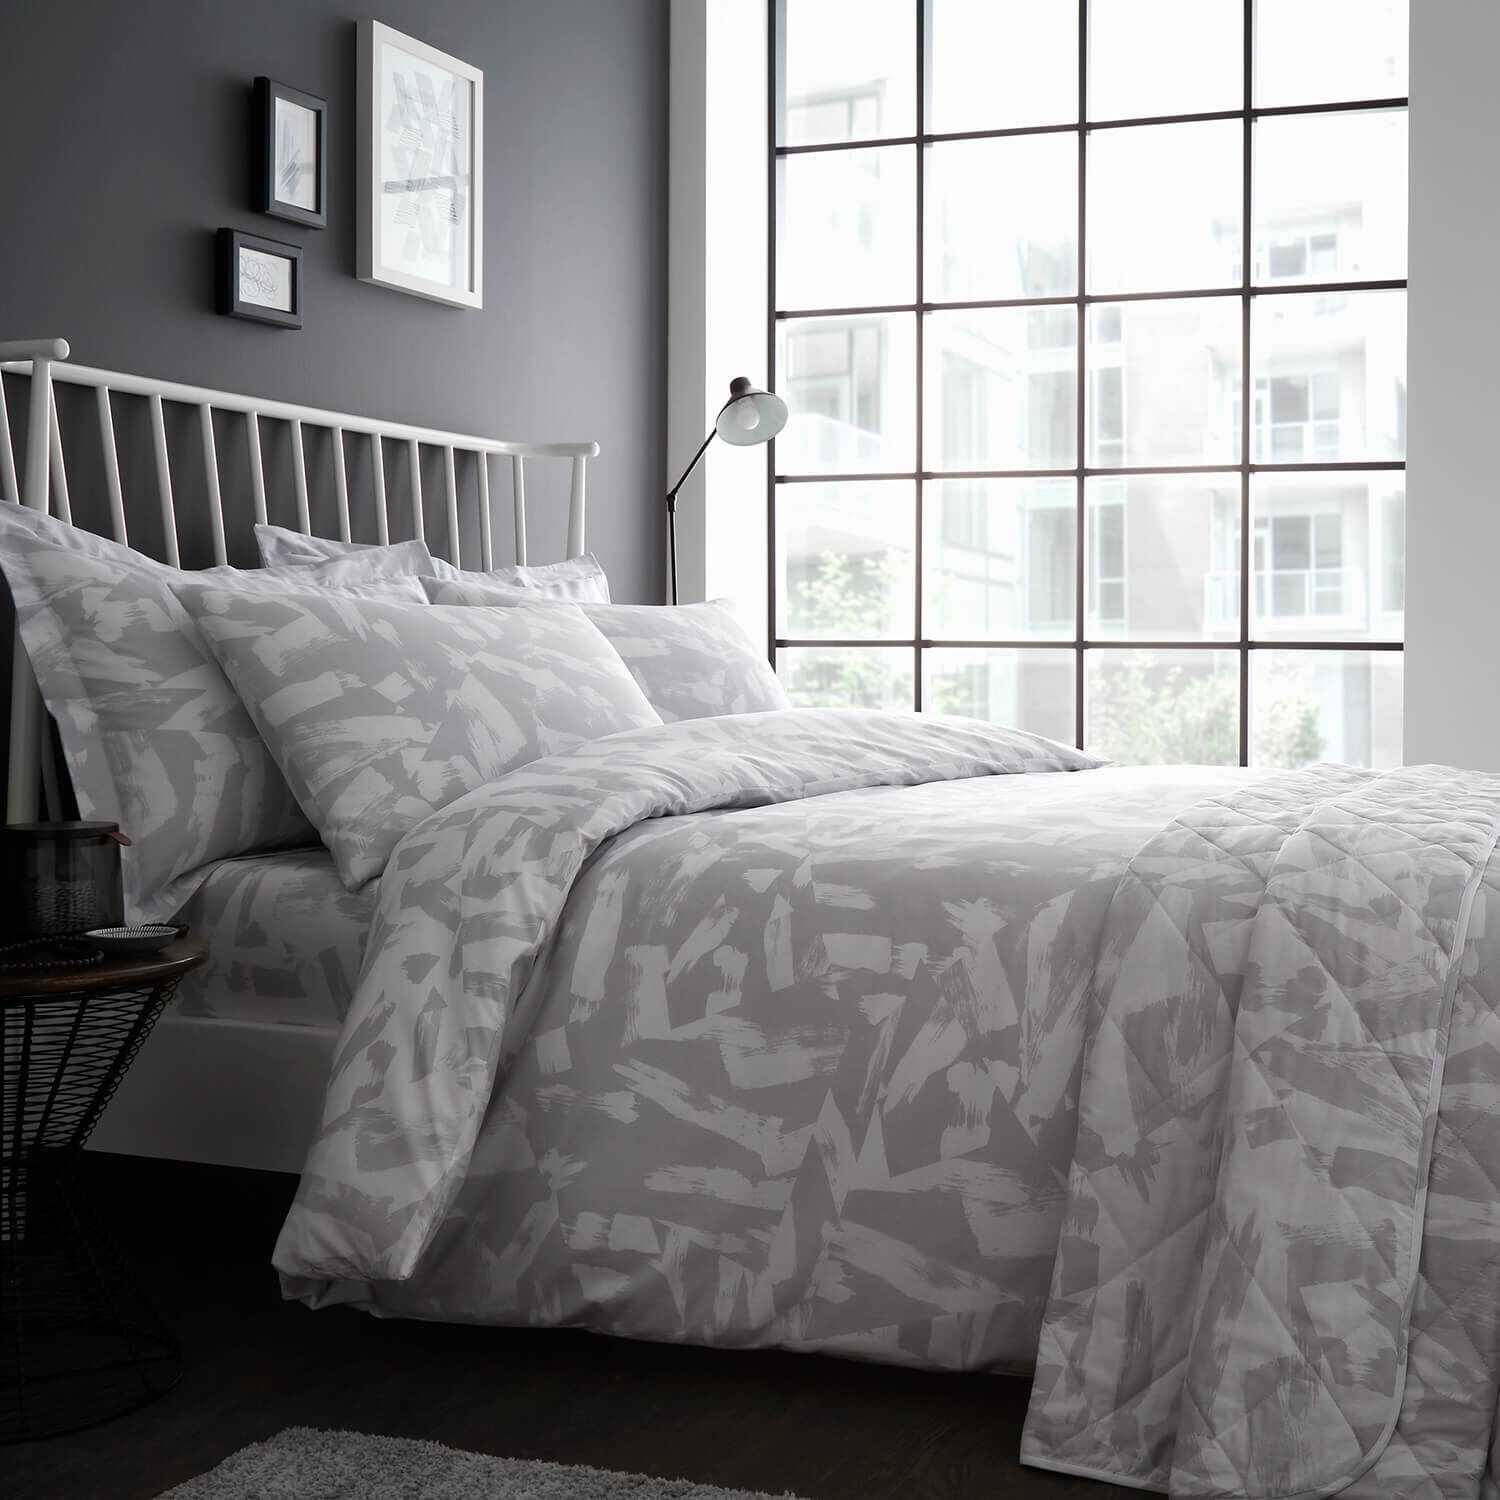 Adam Grey Bed Linen Home More, Grey Super King Bed Sheets